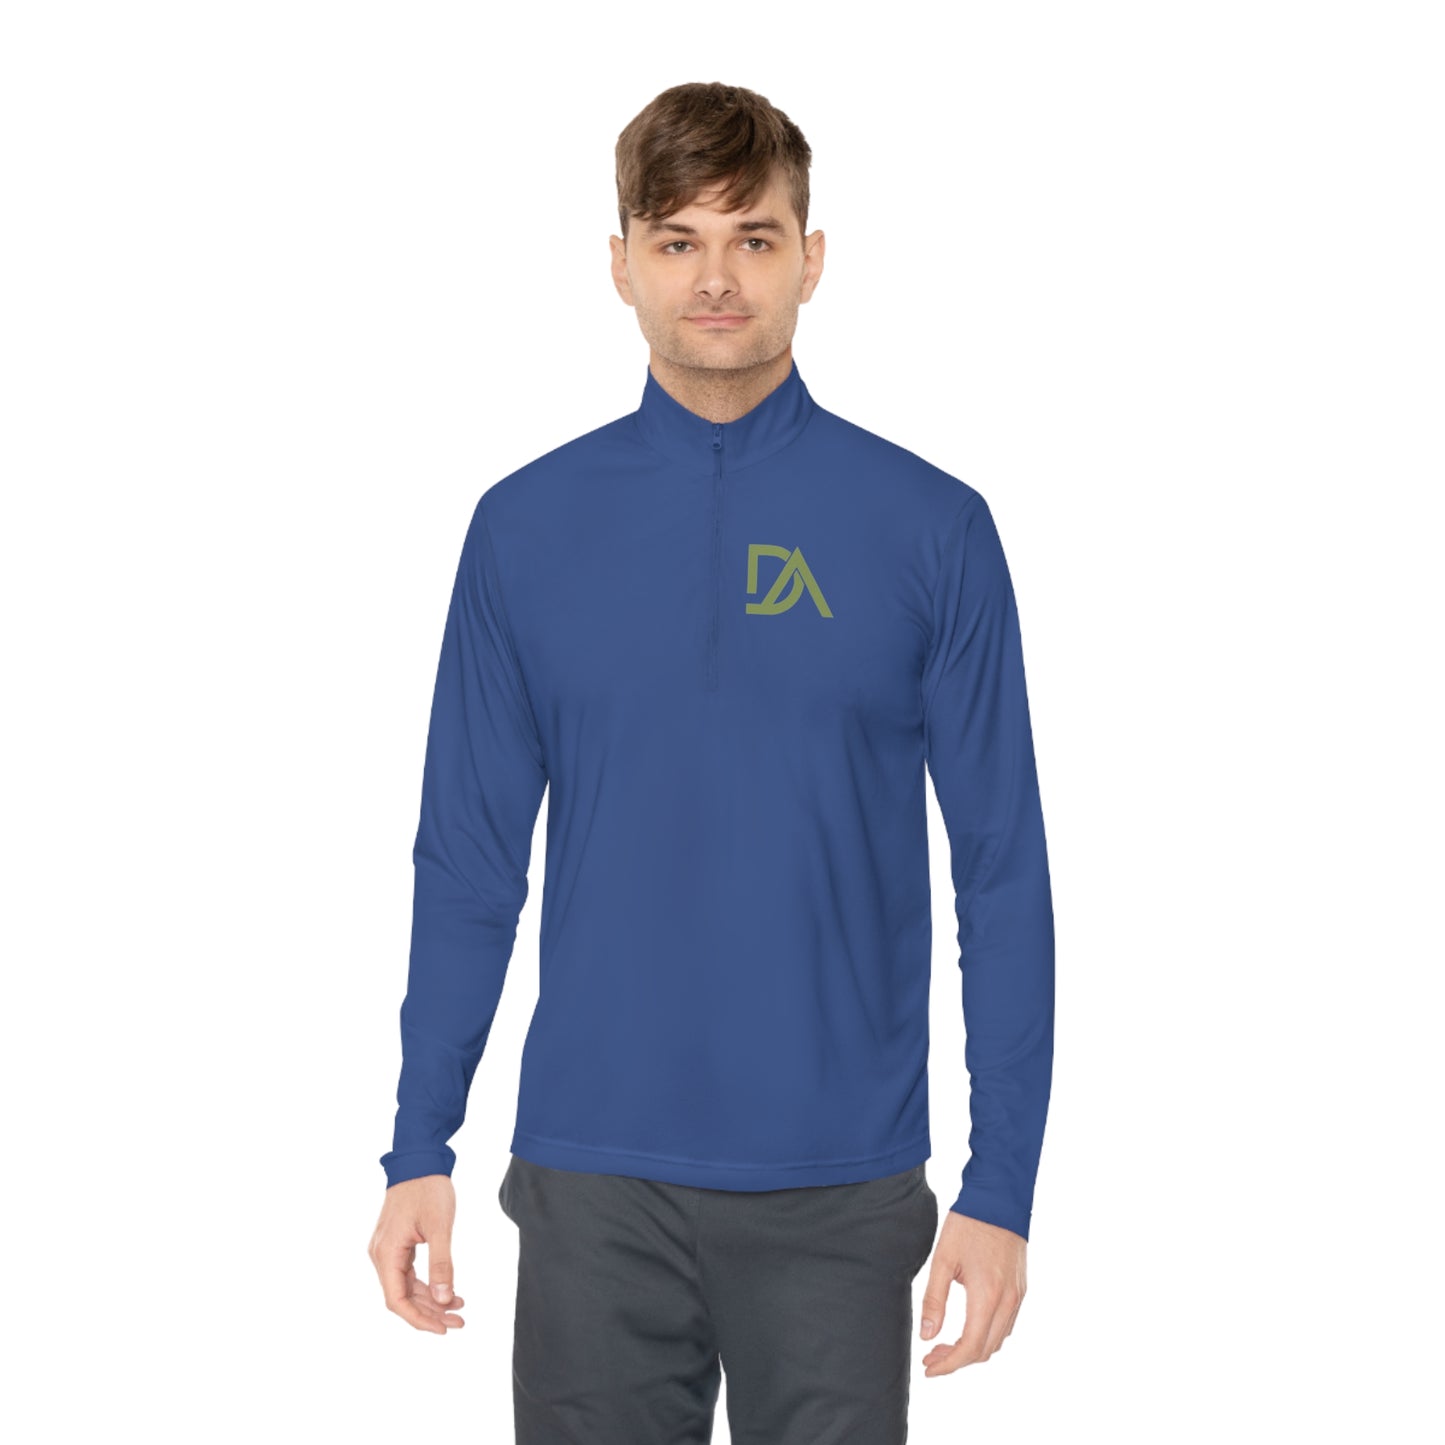 D.A Unisex Quarter-Zip Pullover